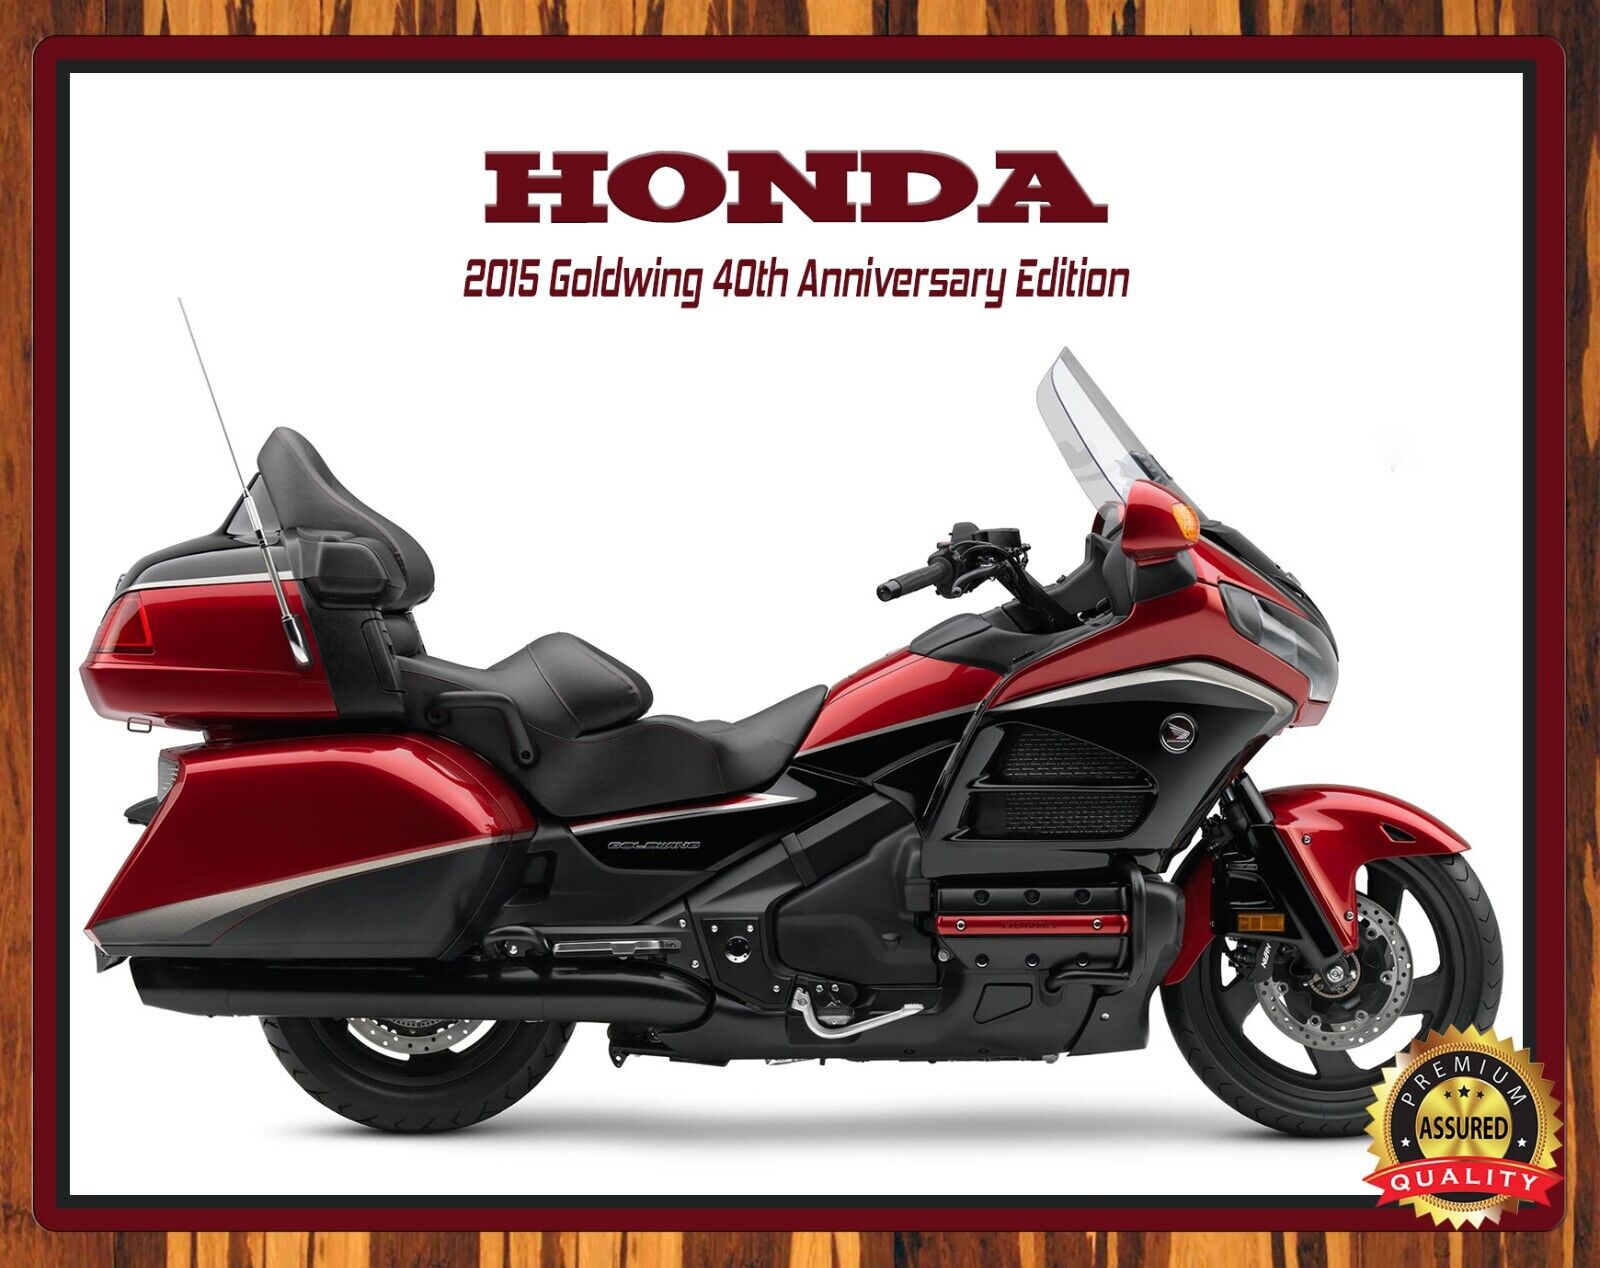 Honda - Goldwing 40th Anniversary - Motorcycle - 2015 - Metal Sign 11 x 14